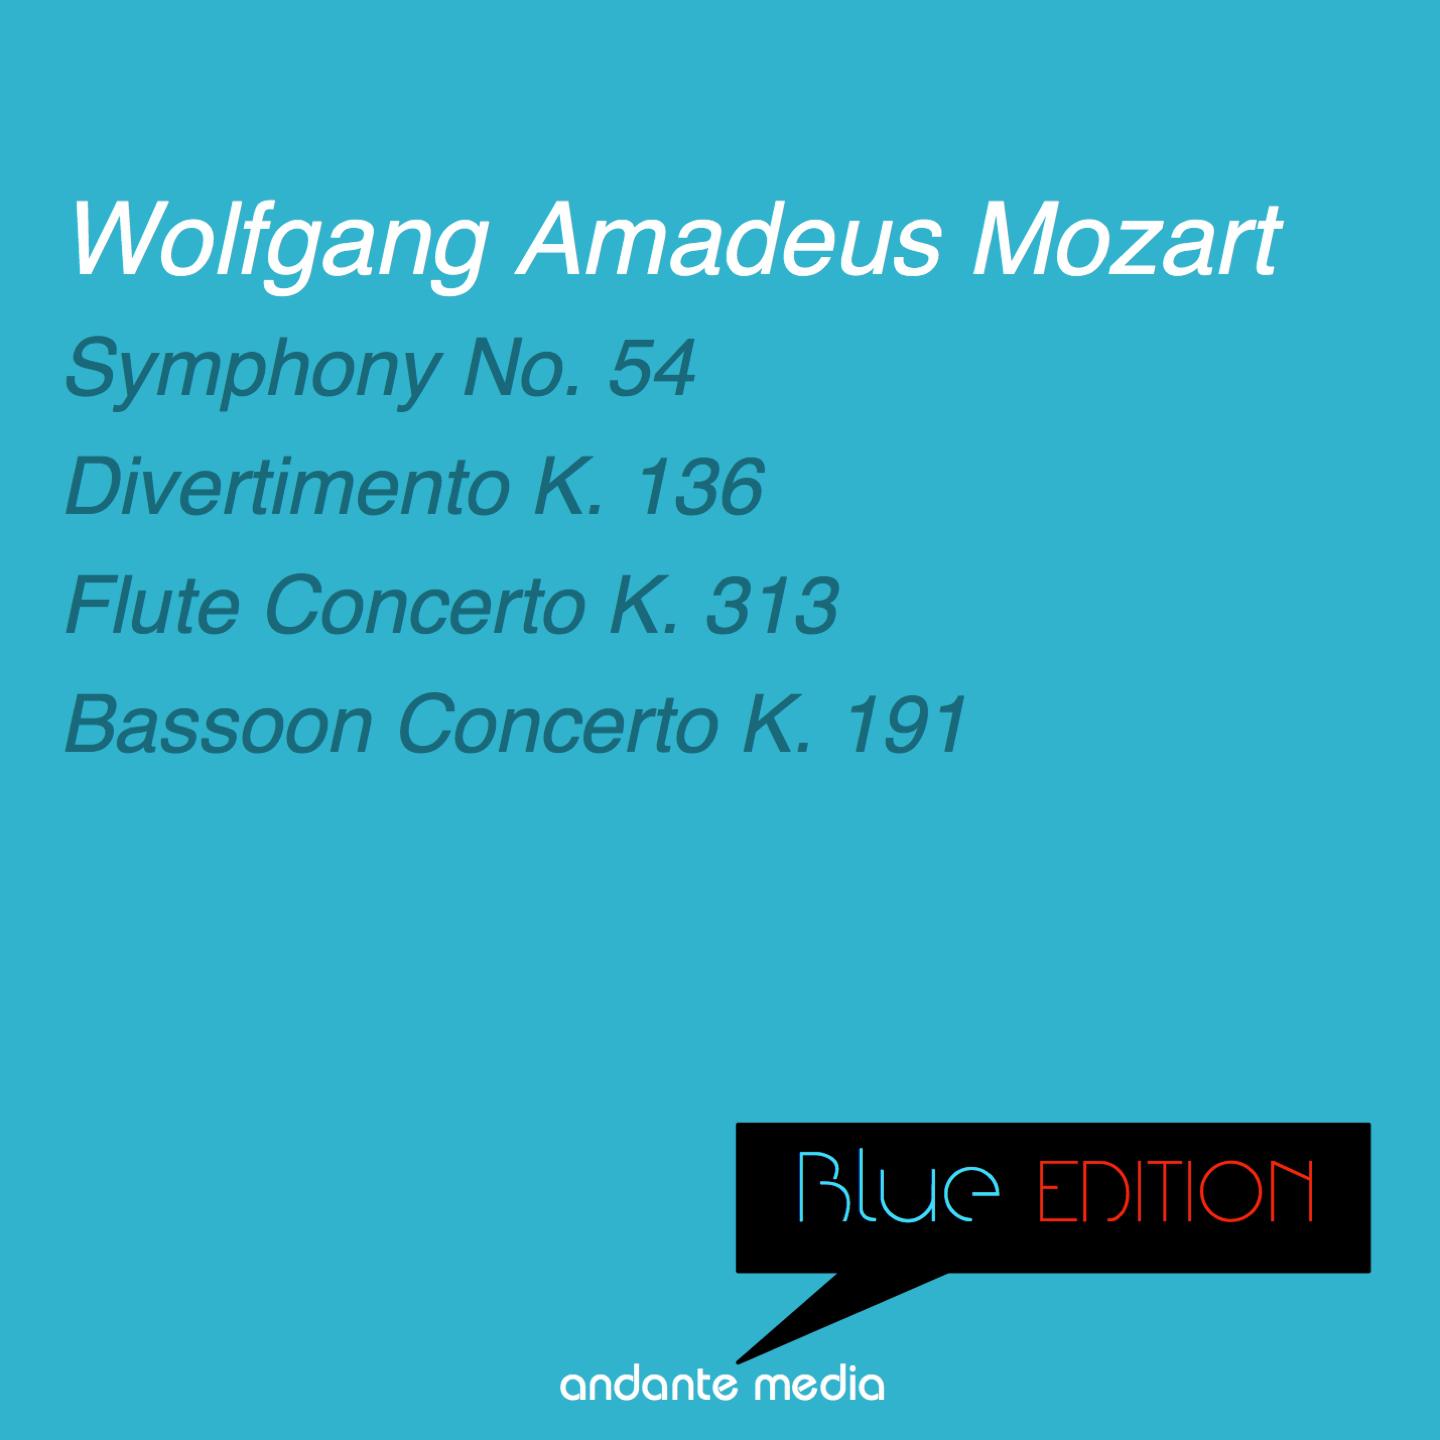 Flute Concerto, K. 313: I. Allegro maestoso